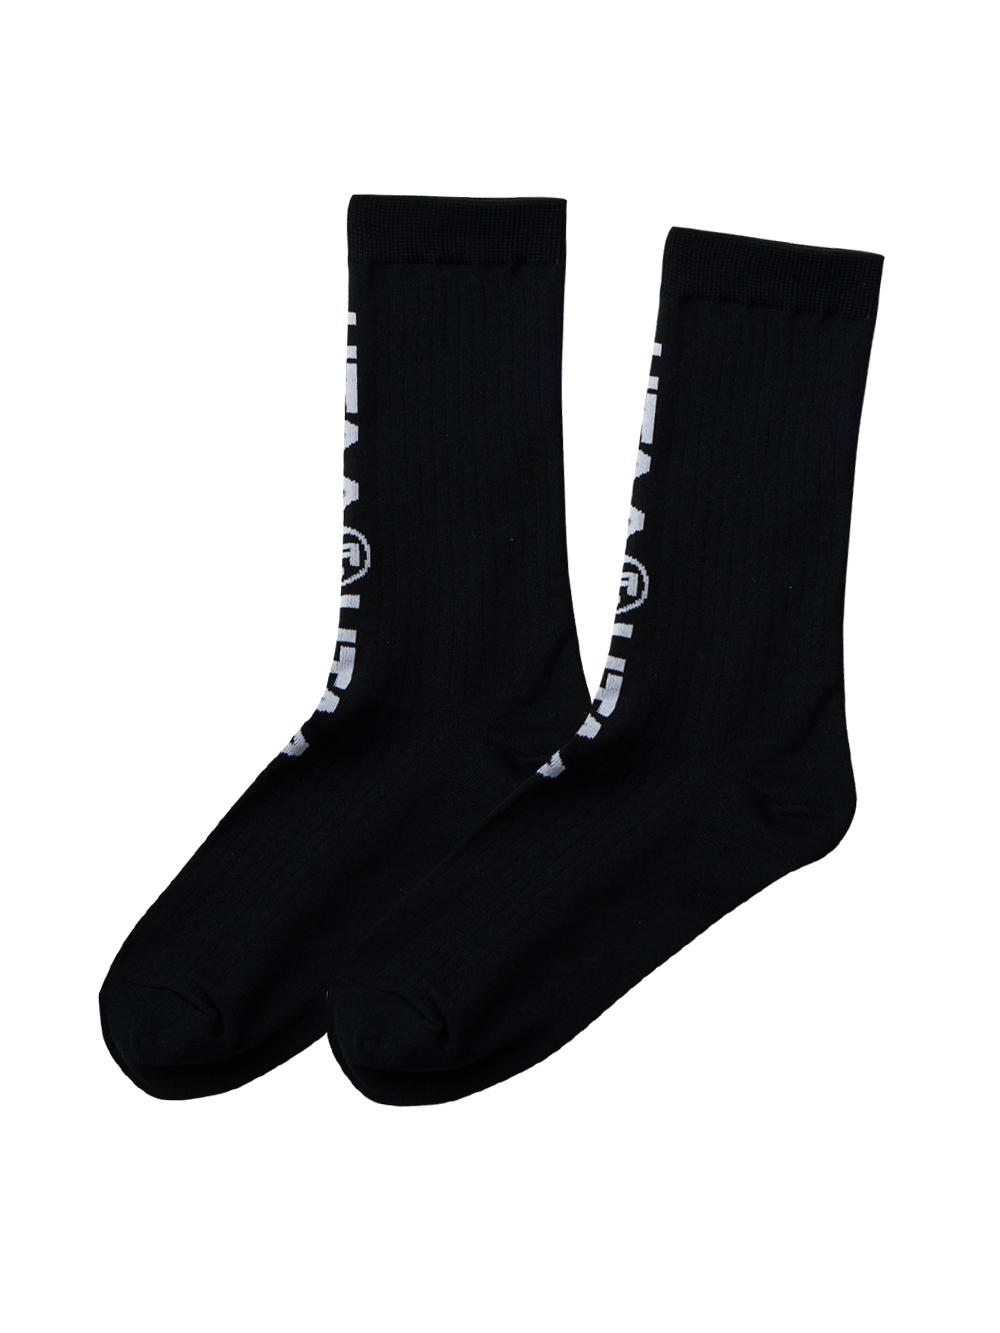 UTAA Double Logo Socks : Black  (UC0GSF142BK)